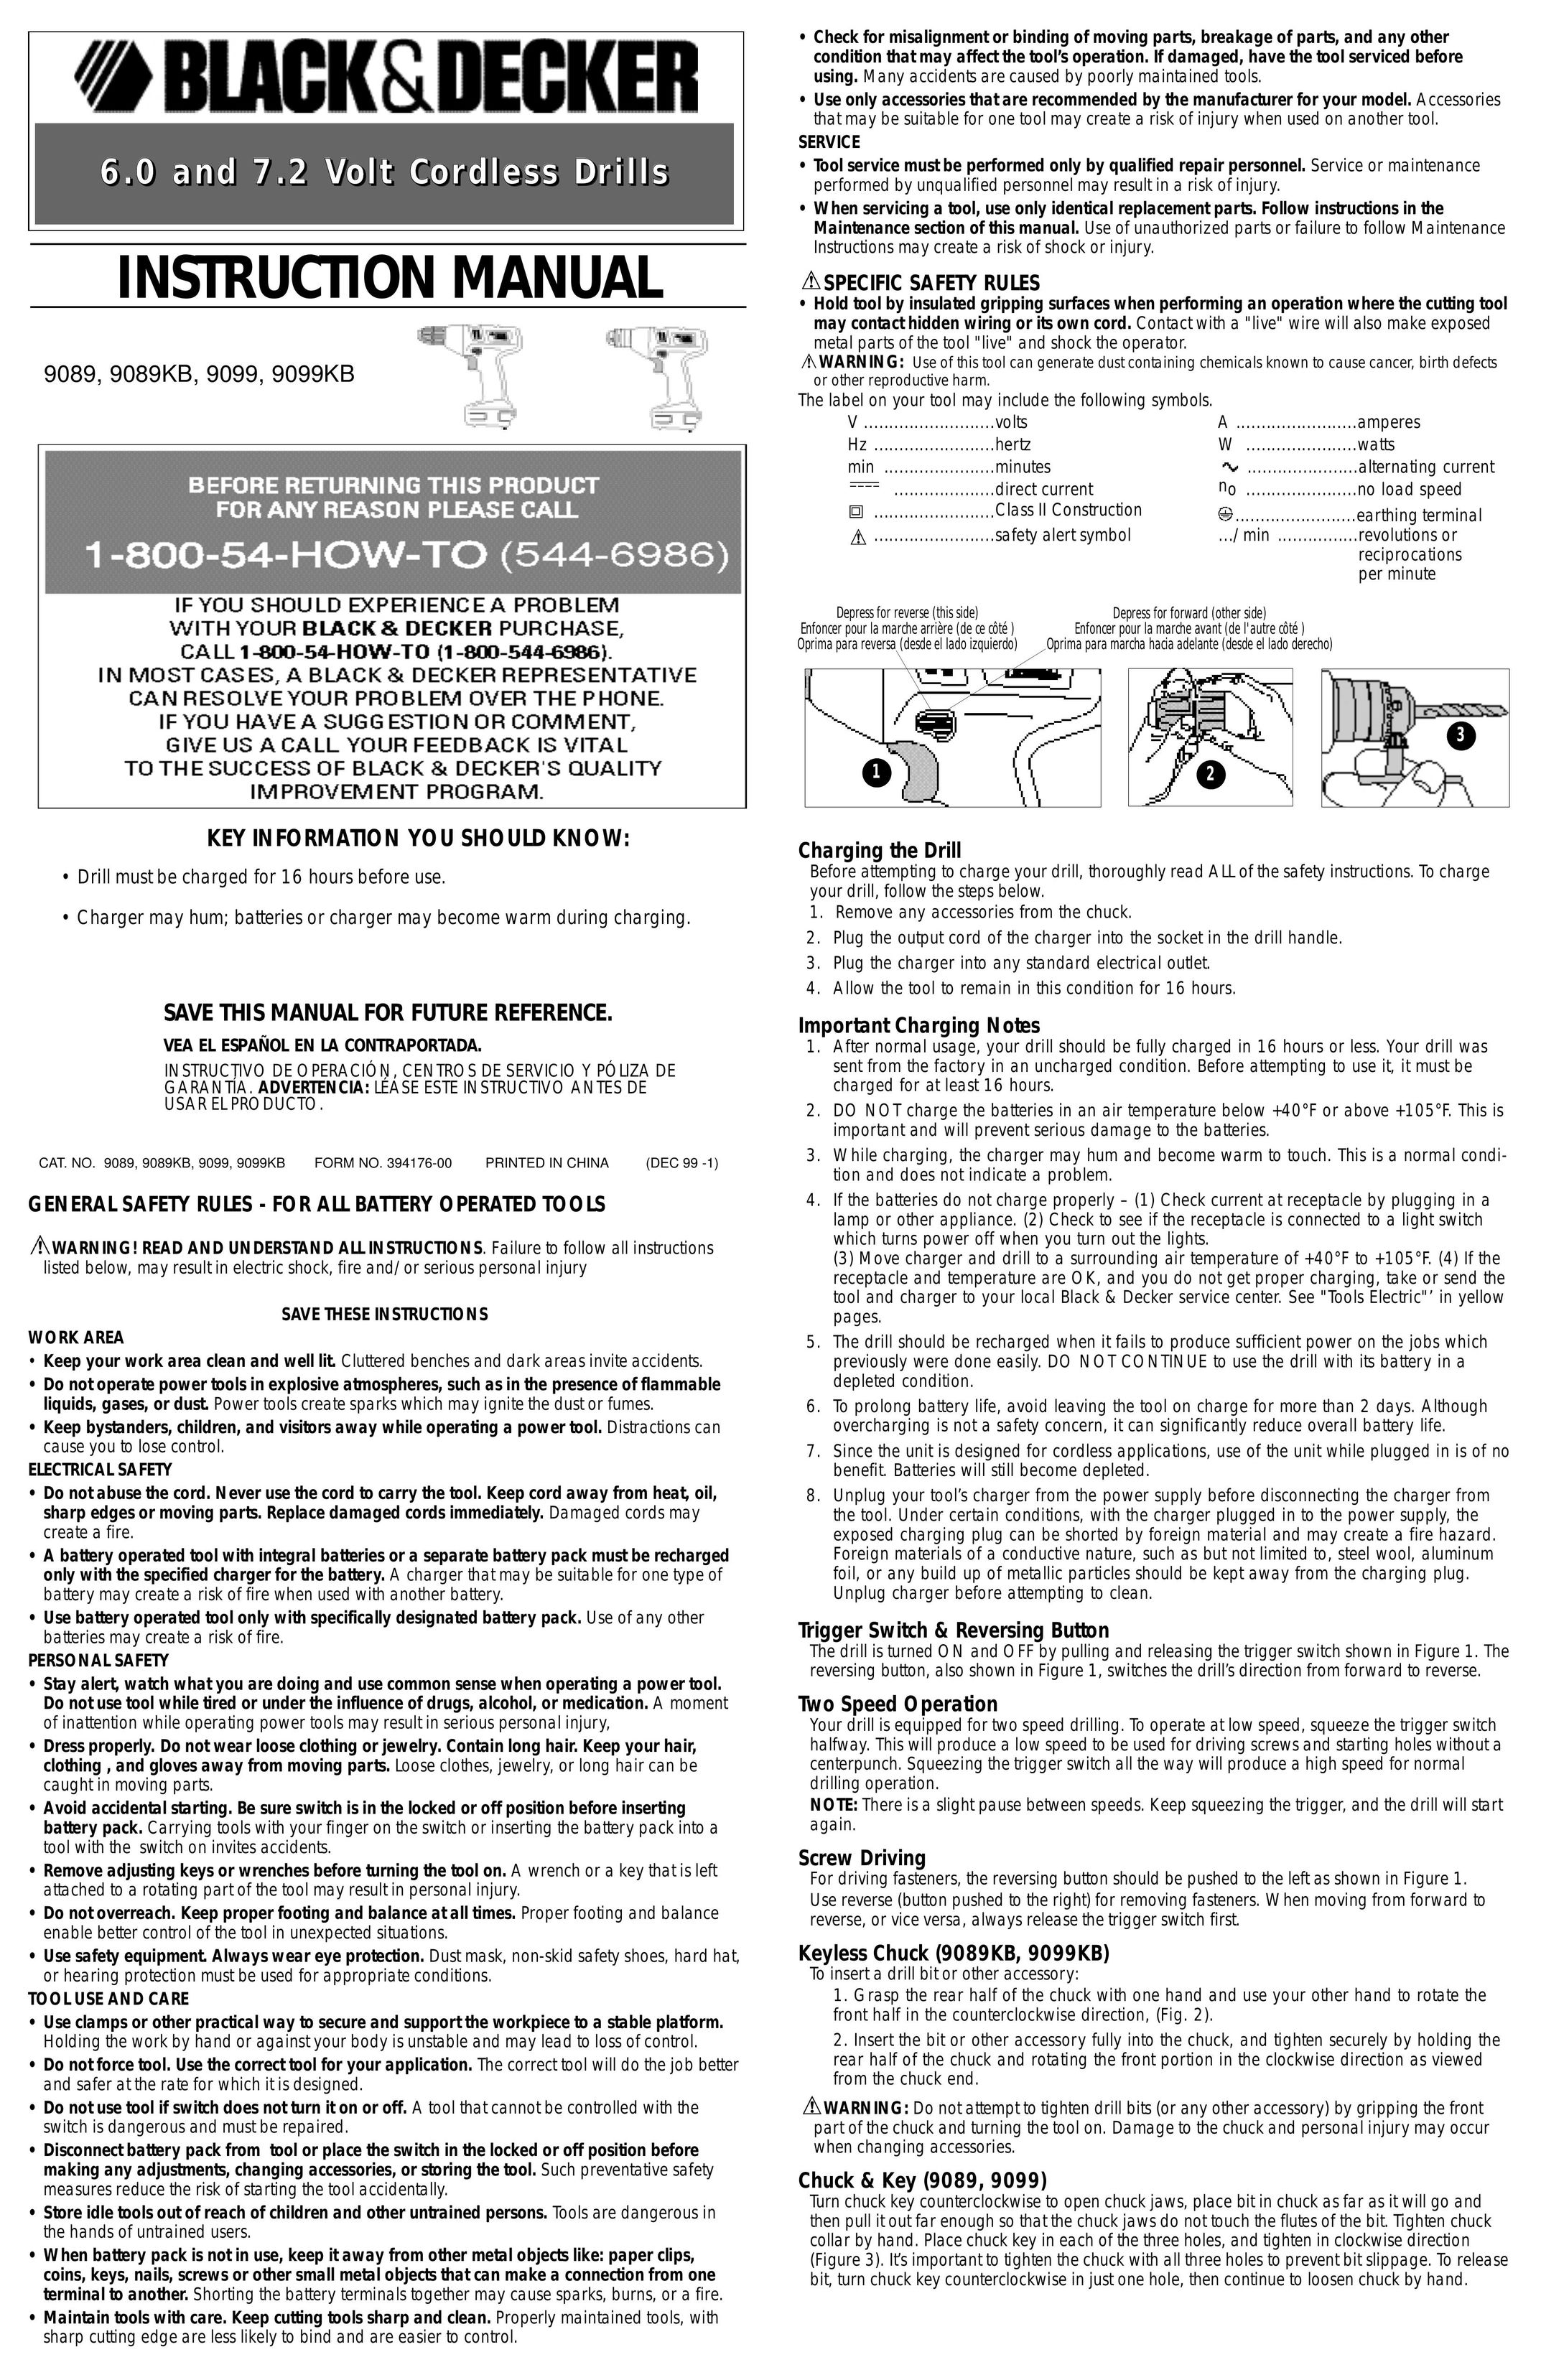 Black & Decker 9089KB Cordless Drill User Manual